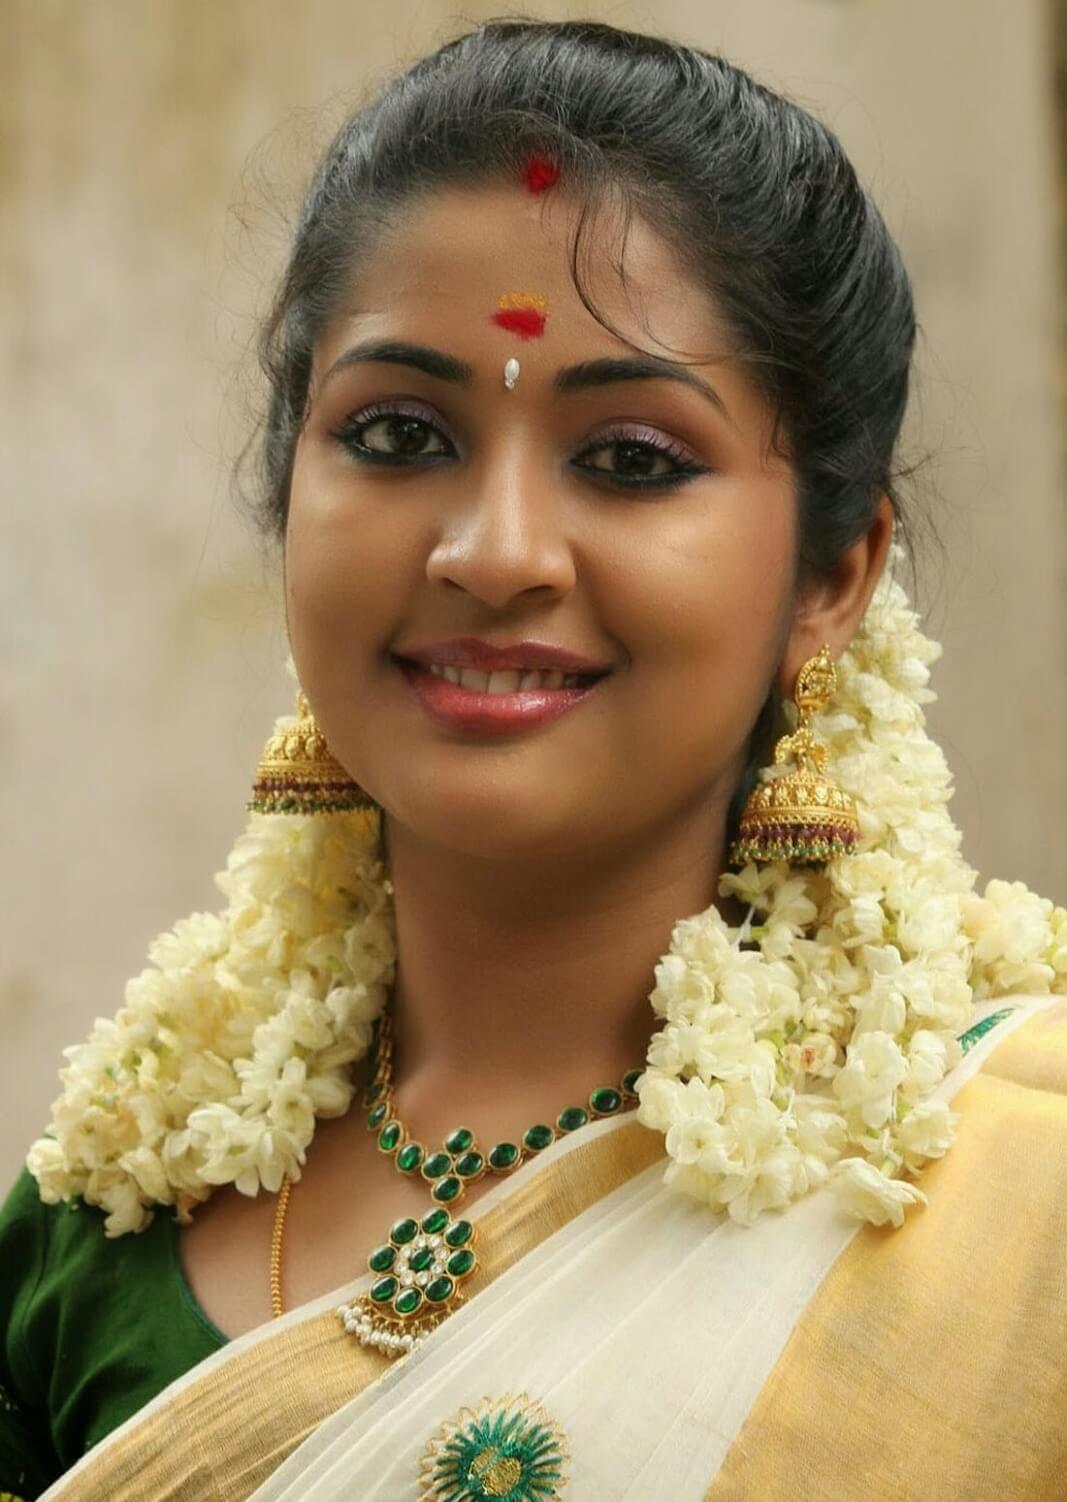 Malayalam Actress Navya Nair Smiling Stills In White Saree - Actress A
lbum